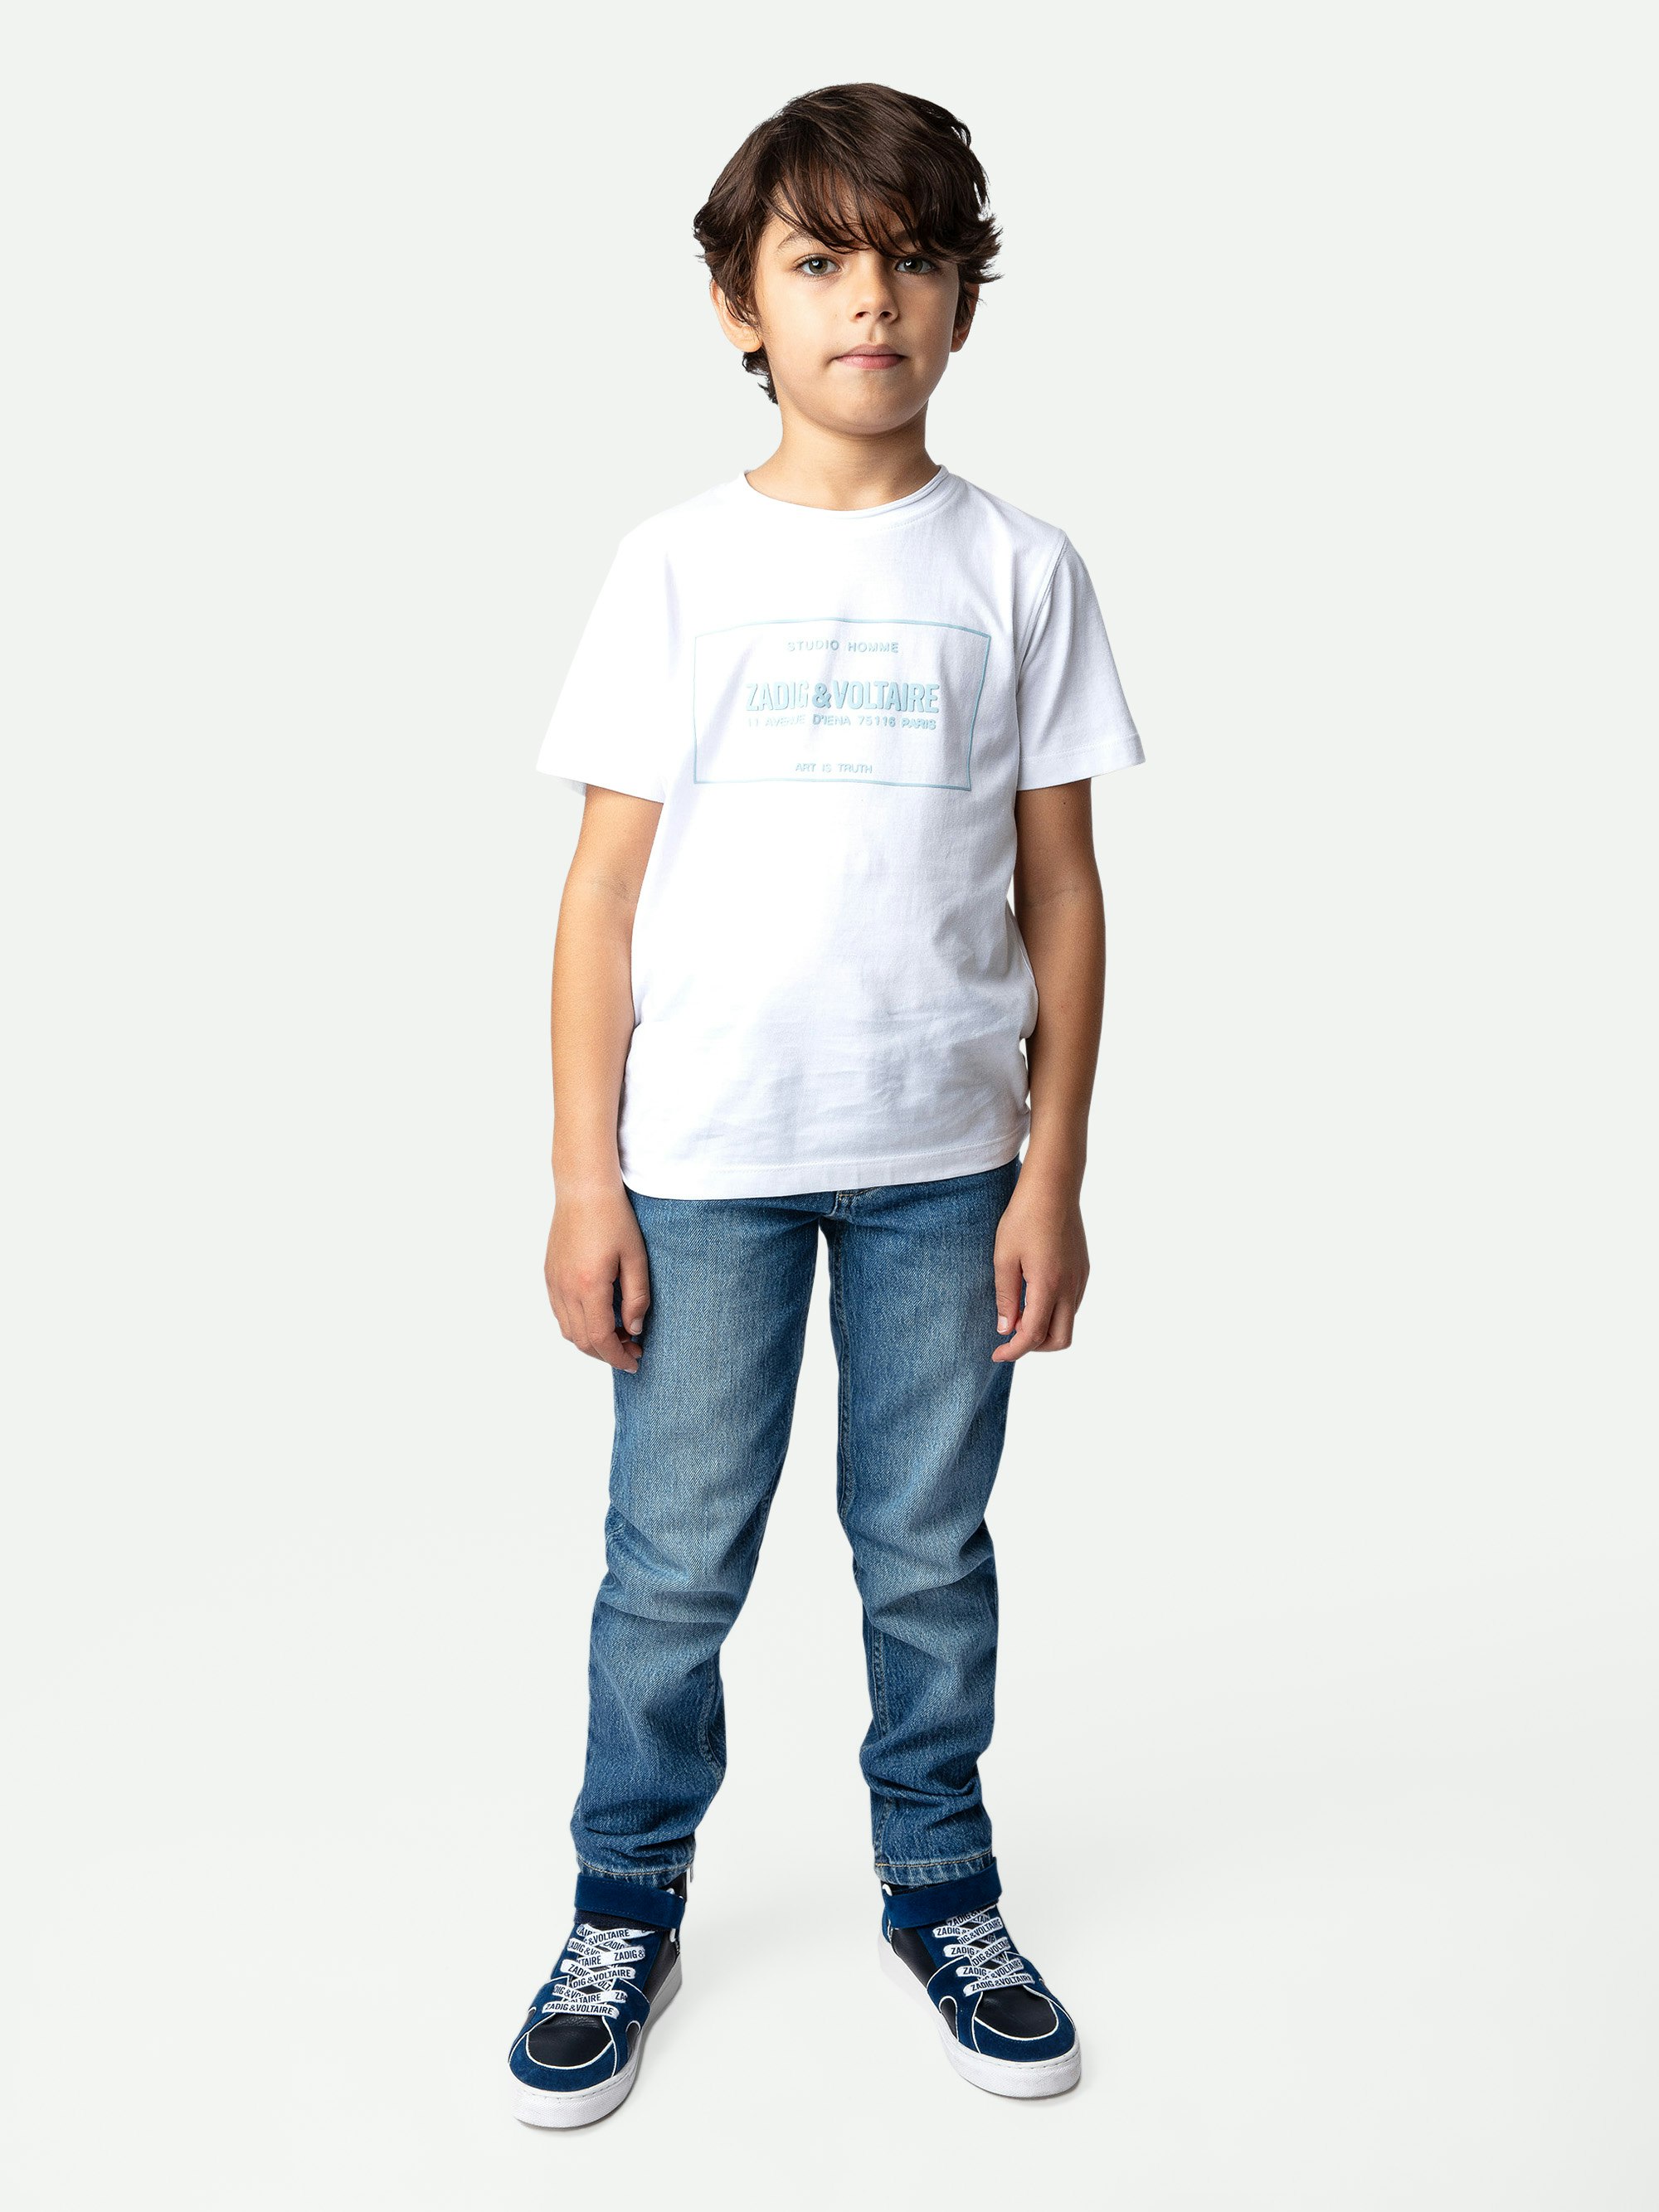 T-shirt Toby Garçon - T-shirt garçon à manches courtes en jersey coton blanc orné du blason.